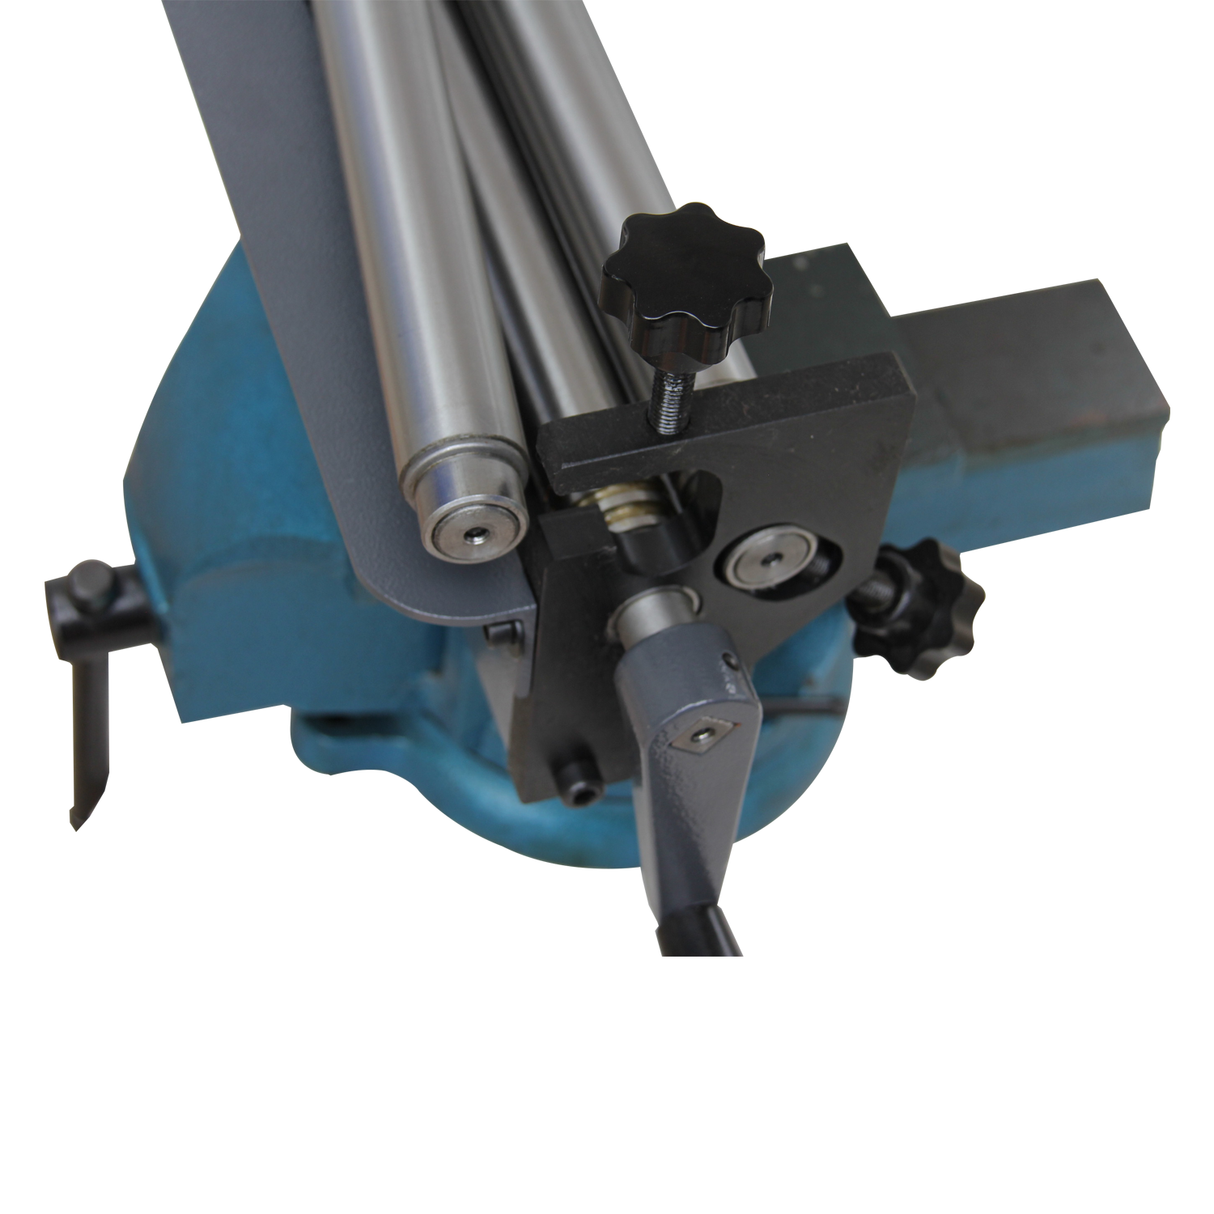 KANG Industrial SJ-300 Slip Roll Machine, 300mm Forming Width, 1.0mm Capacity